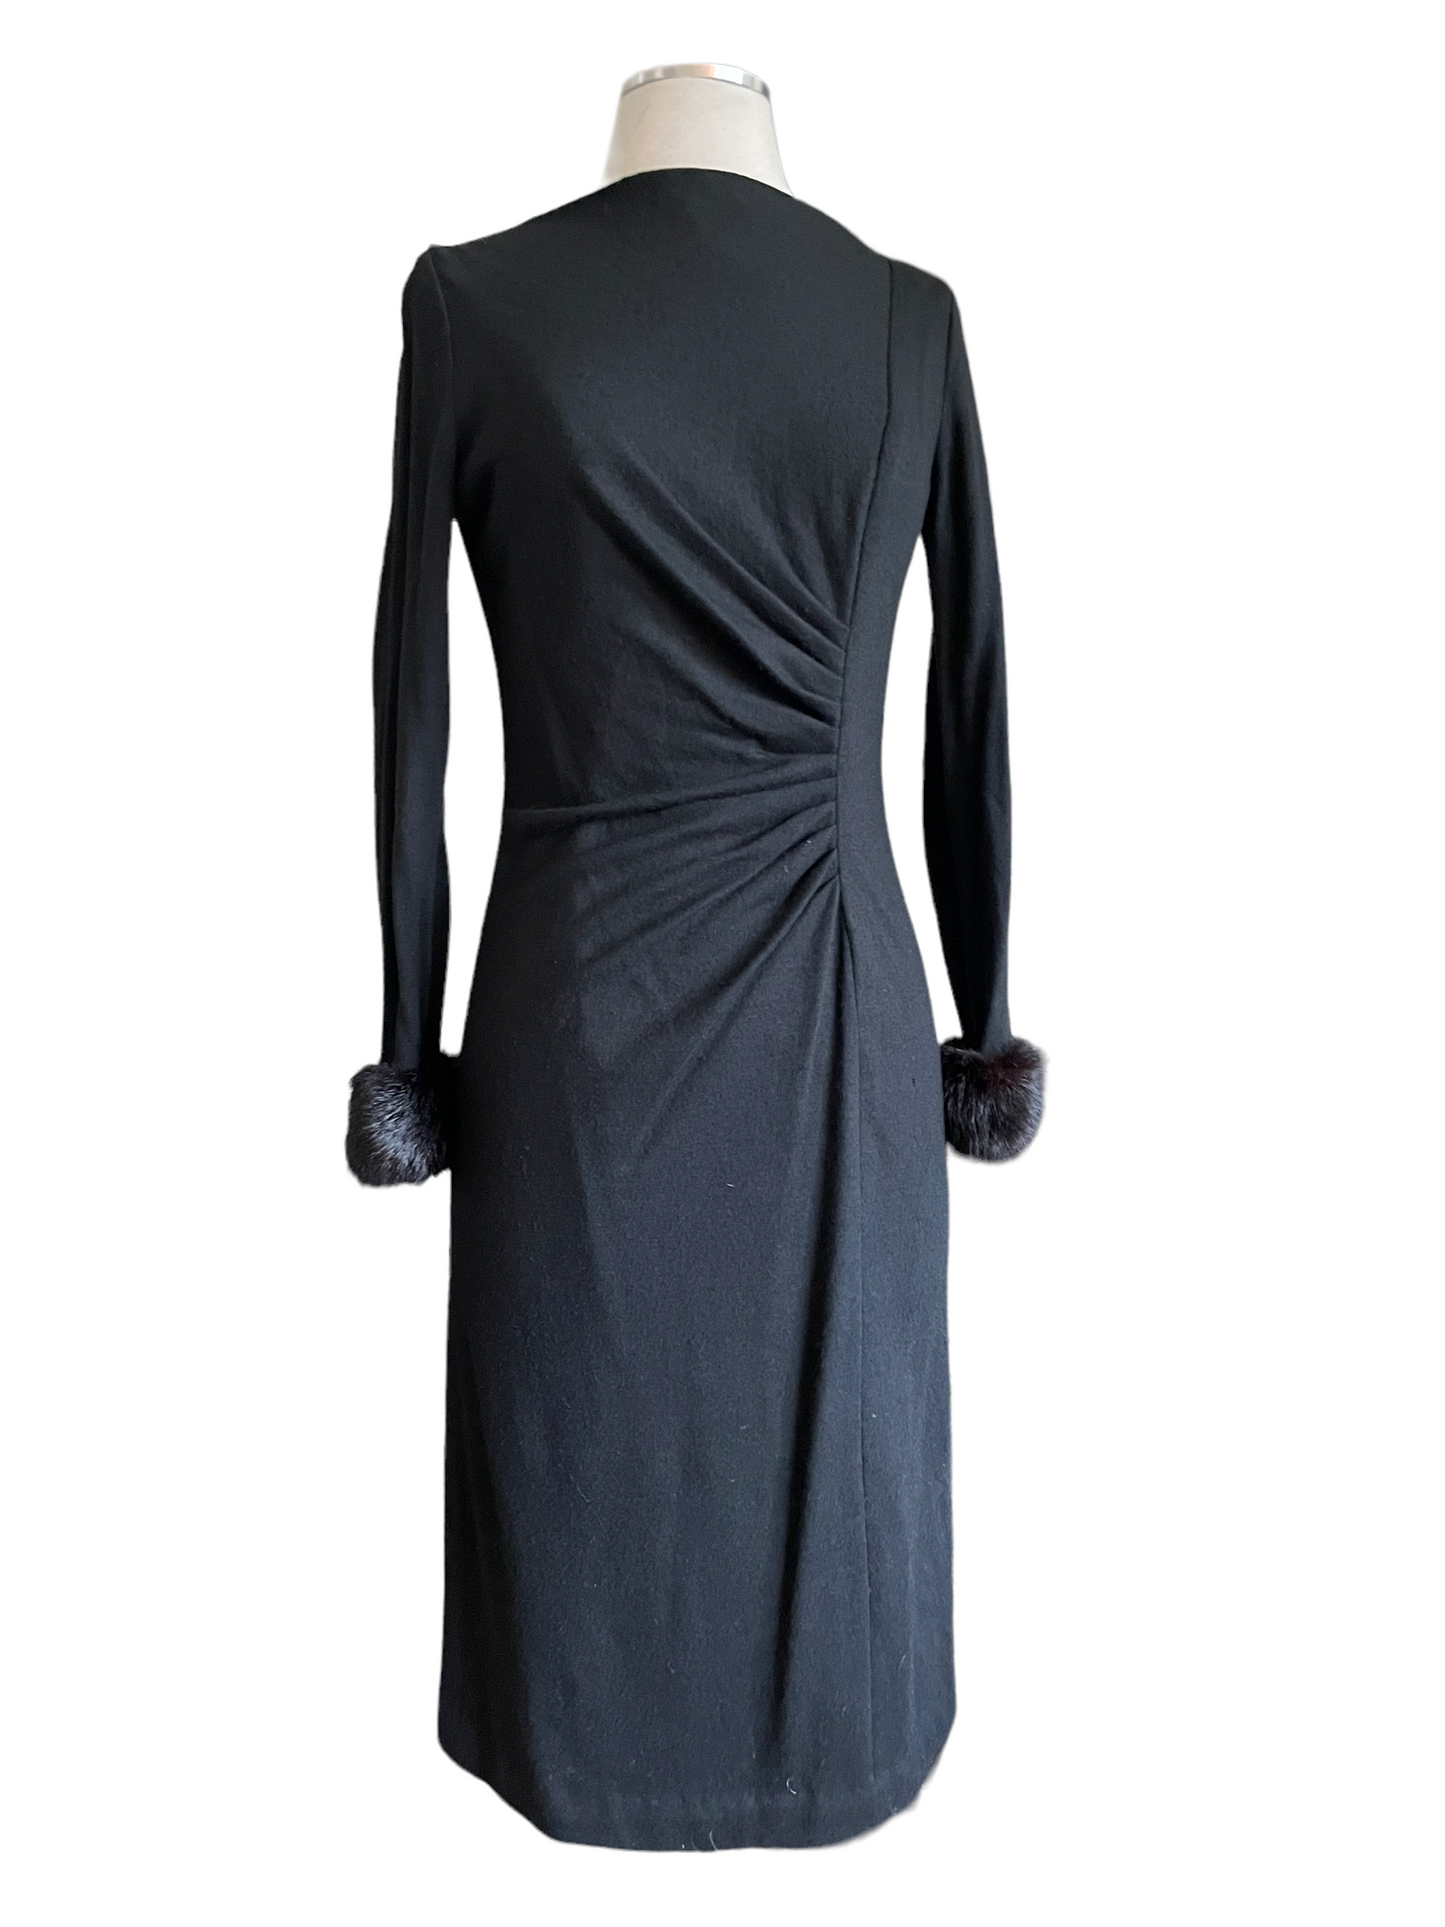 Vintage 1950s Black Wool Dress with Mink Fur Cuffs SZ S |  Barn Owl Vintage | Seattle Vintage Dresses Full front view.